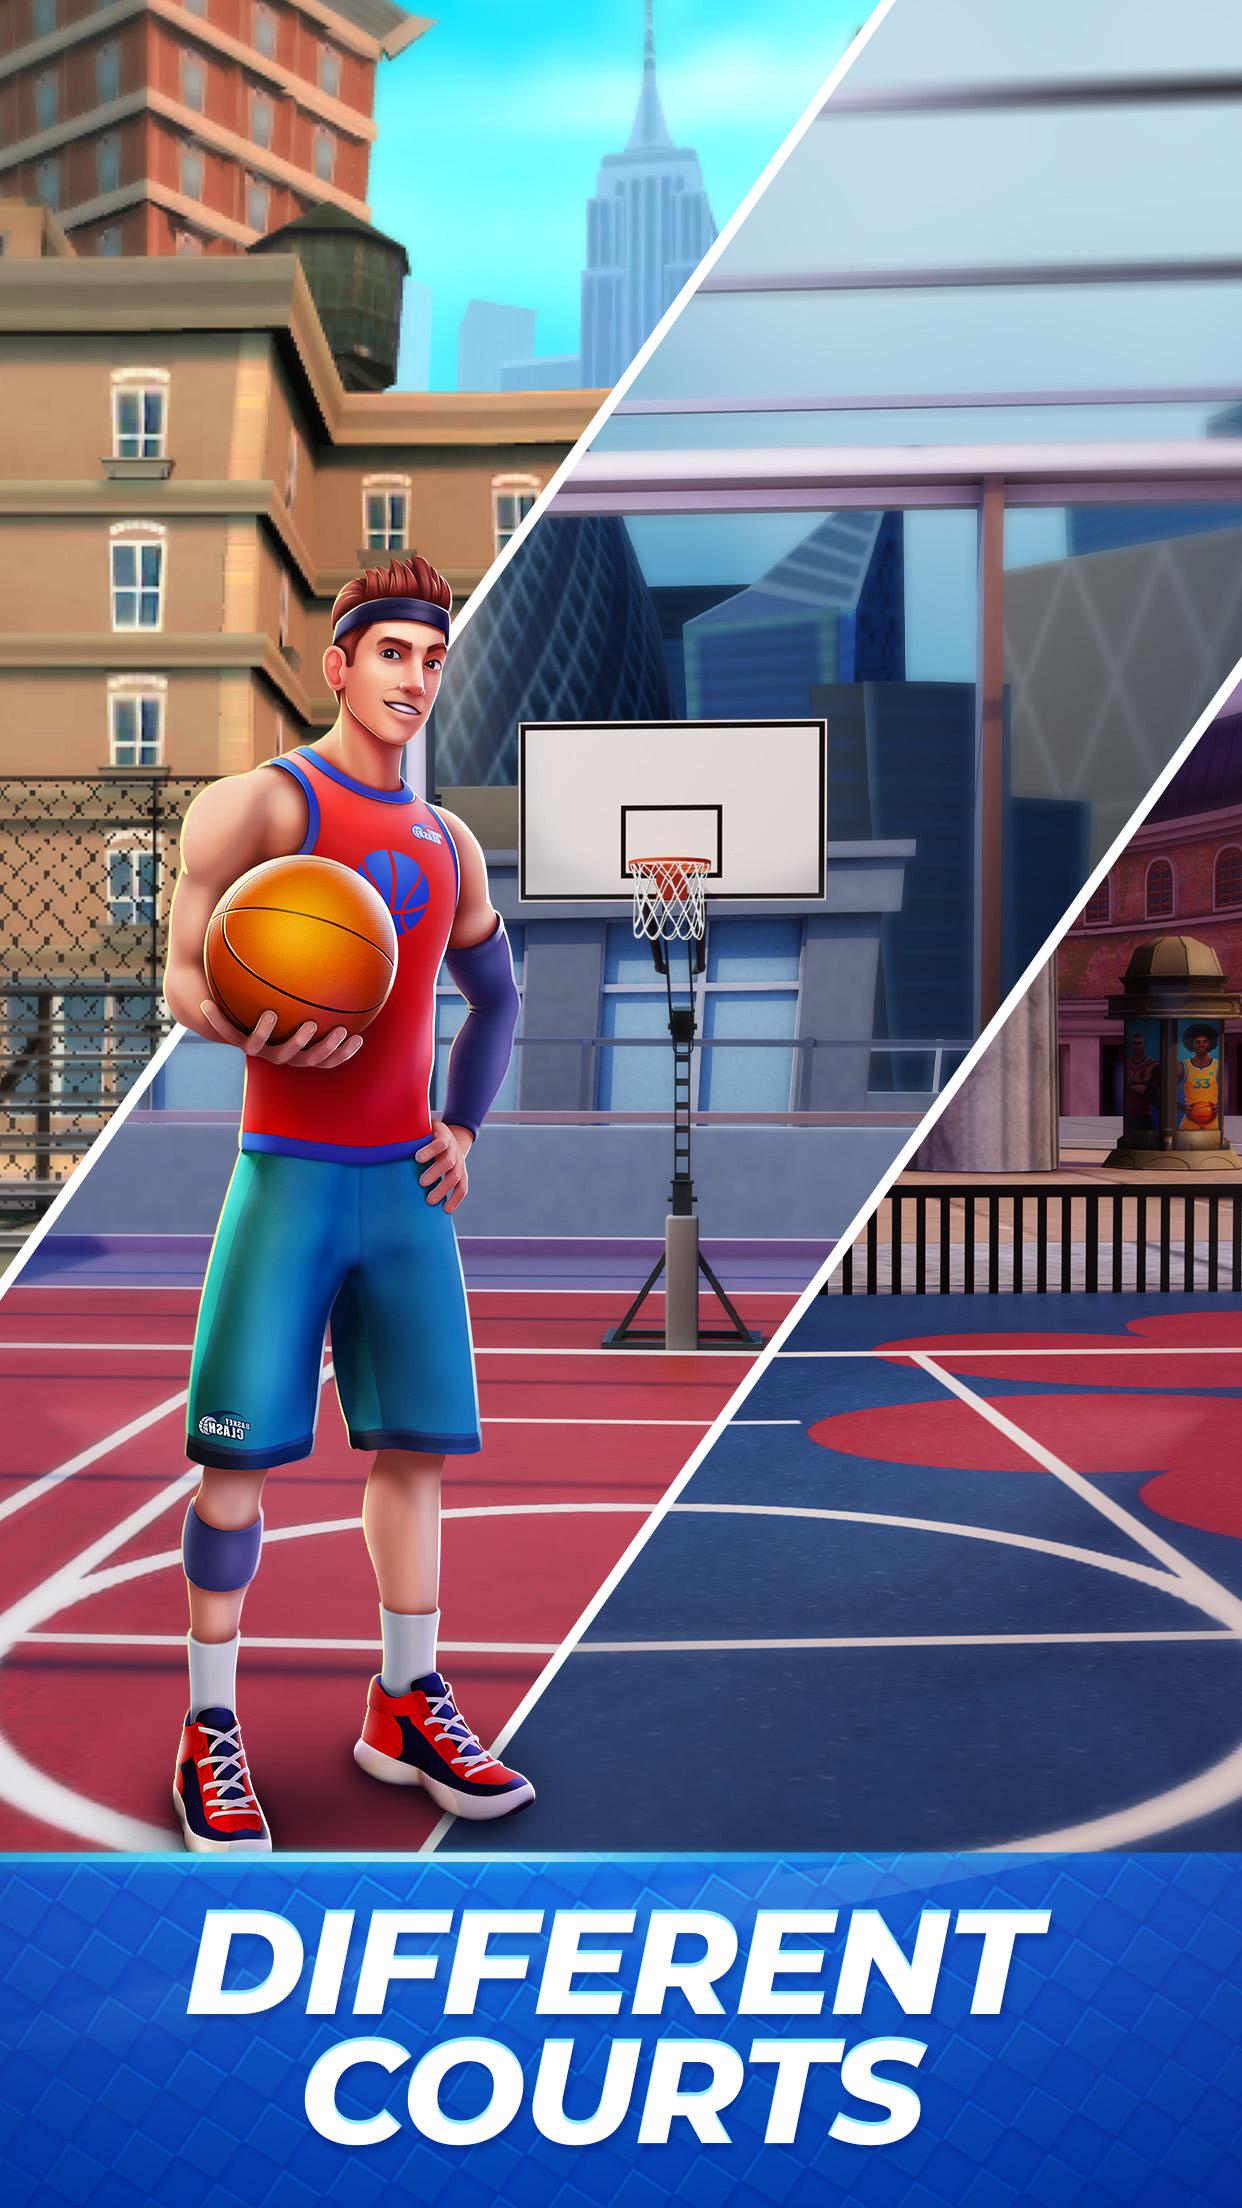 Basket Clash: 1v1 Sports Games for Android - APK Download